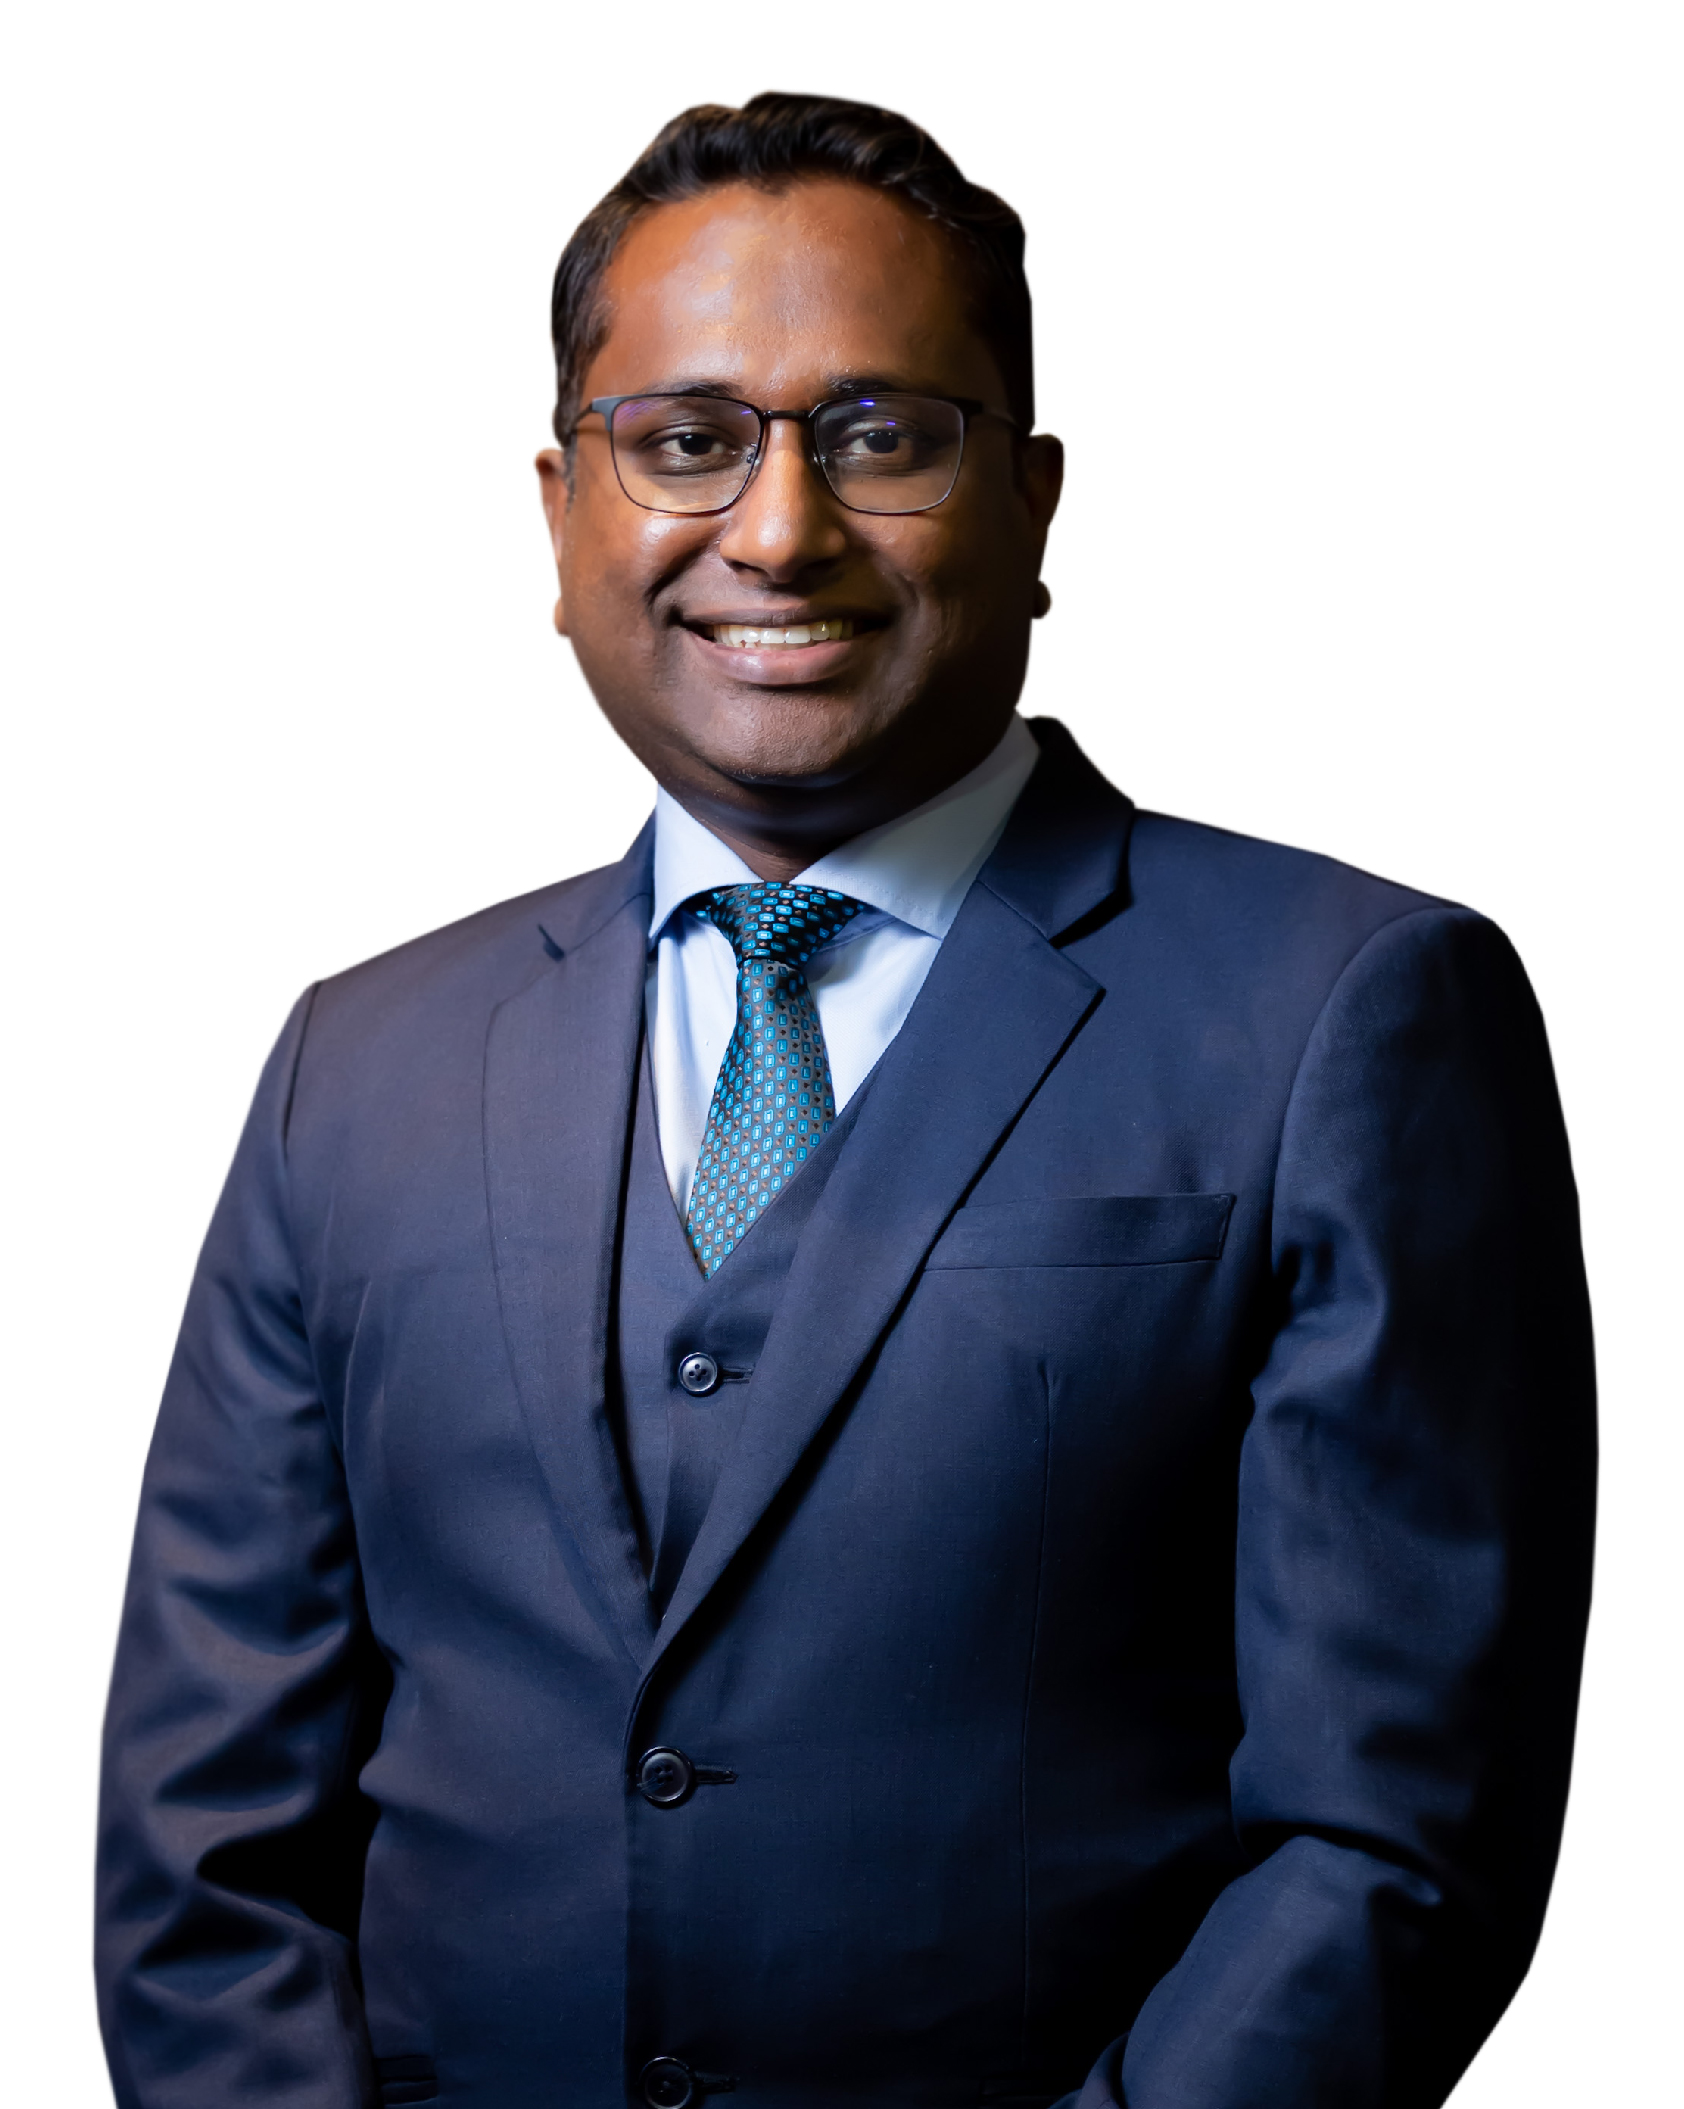 Dr. Chandran Nadarajan, perunding Radiologi Intervensi di Gleneagles Hospital Kota Kinabalu